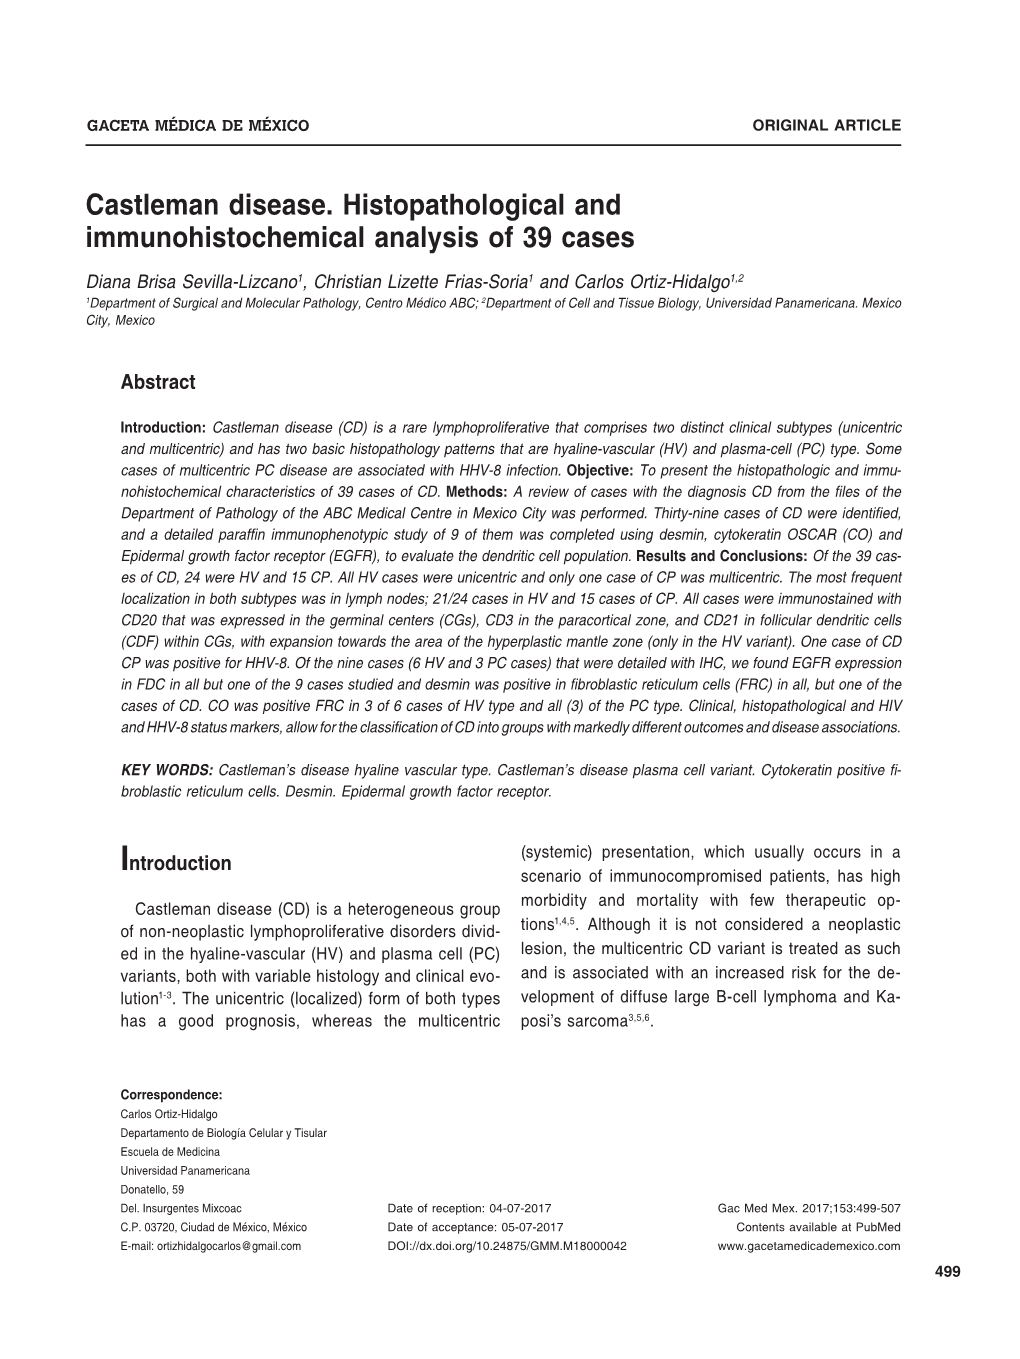 Castleman Disease. Histopathological and Immunohistochemical Analysis